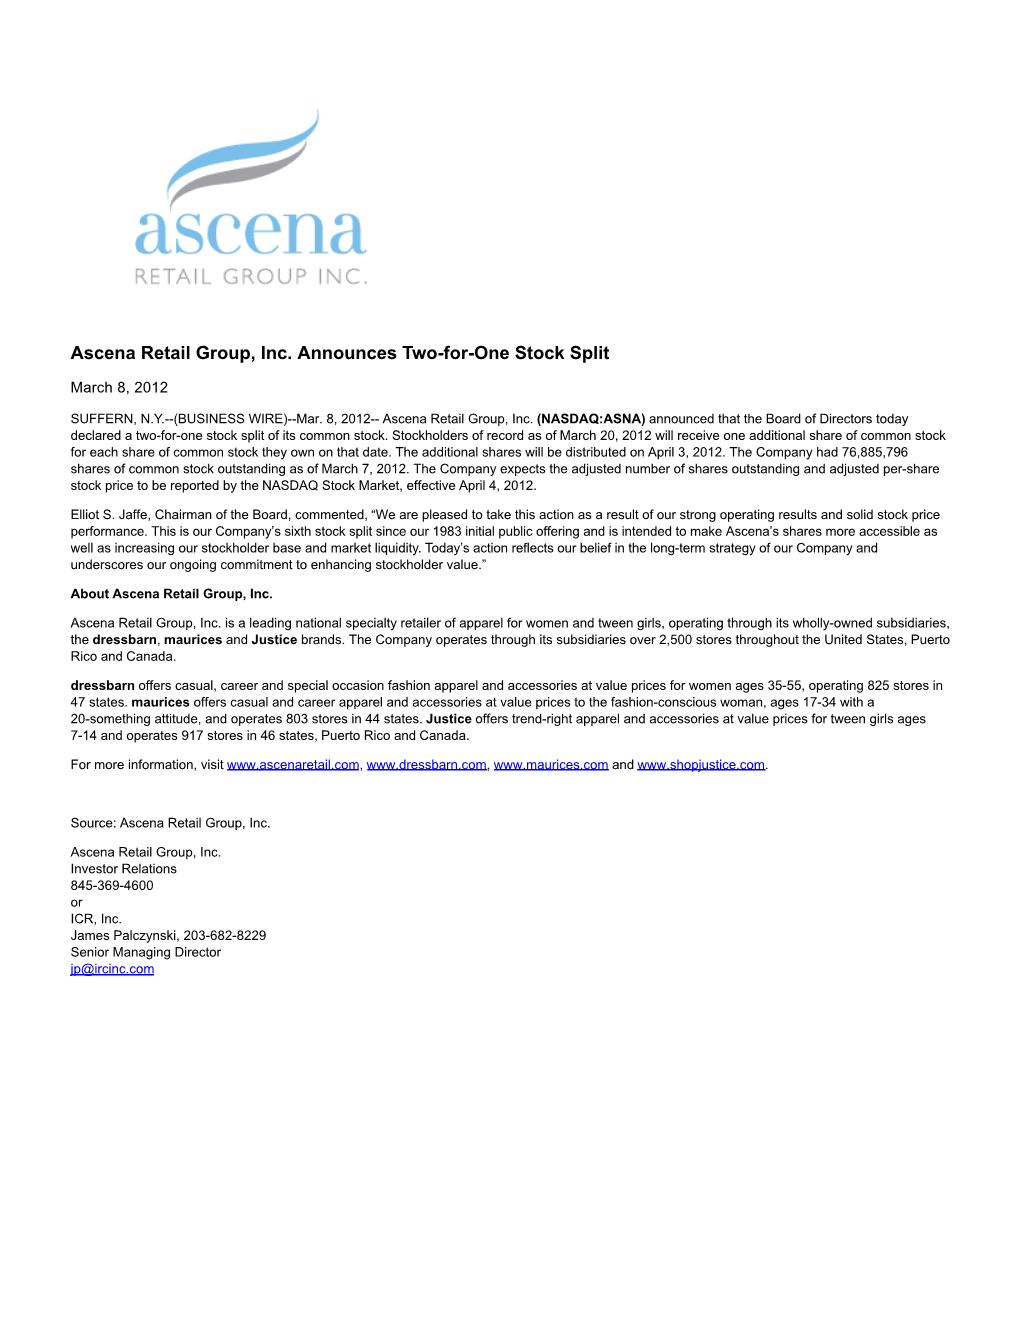 Ascena Retail Group, Inc. Announces Two-For-One Stock Split